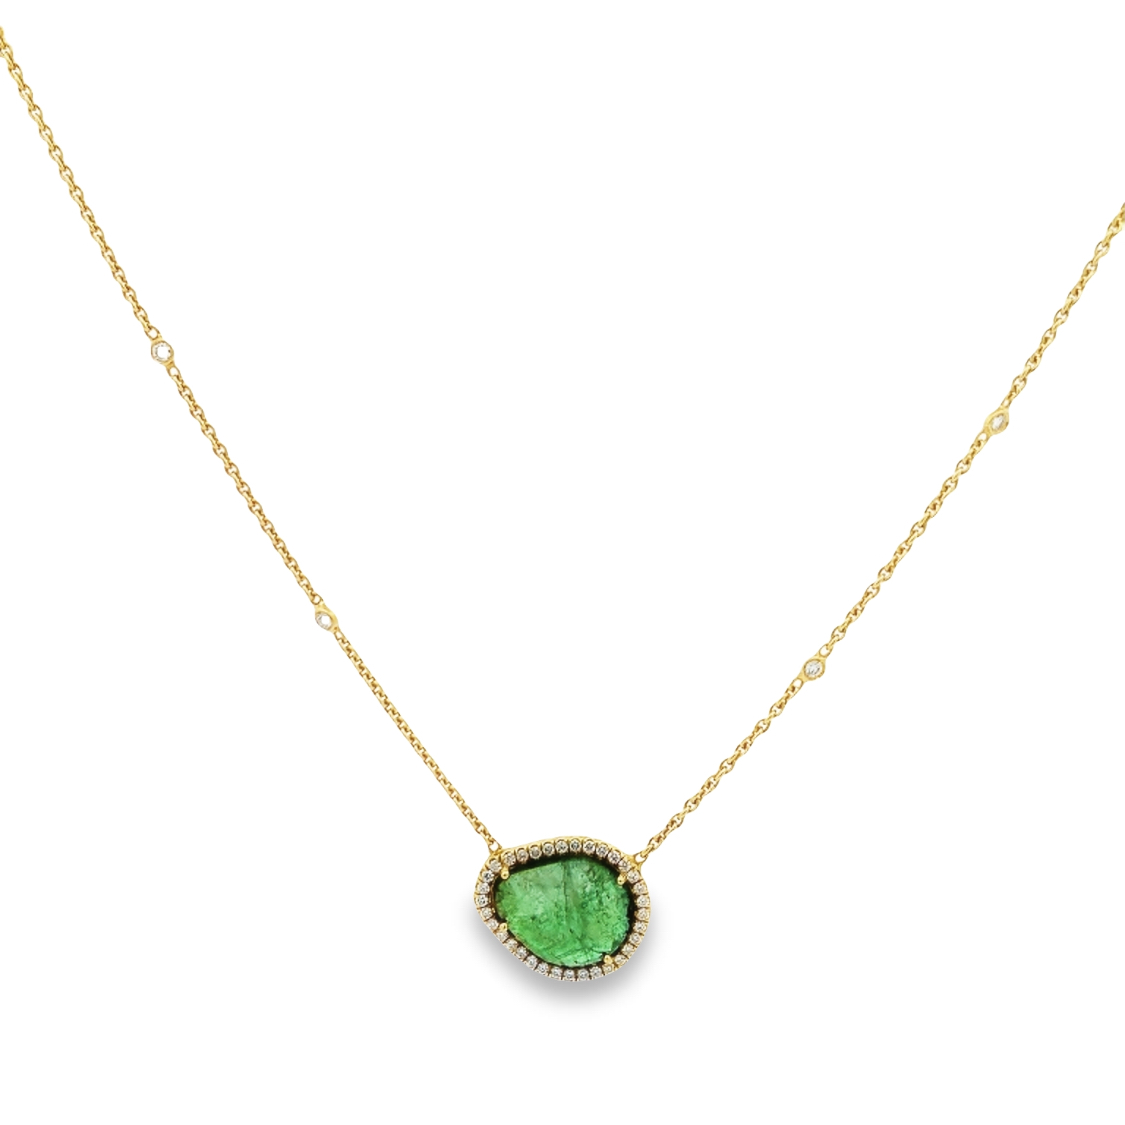 Lauren K 18K Yellow Gold Emerald and Diamond Necklace